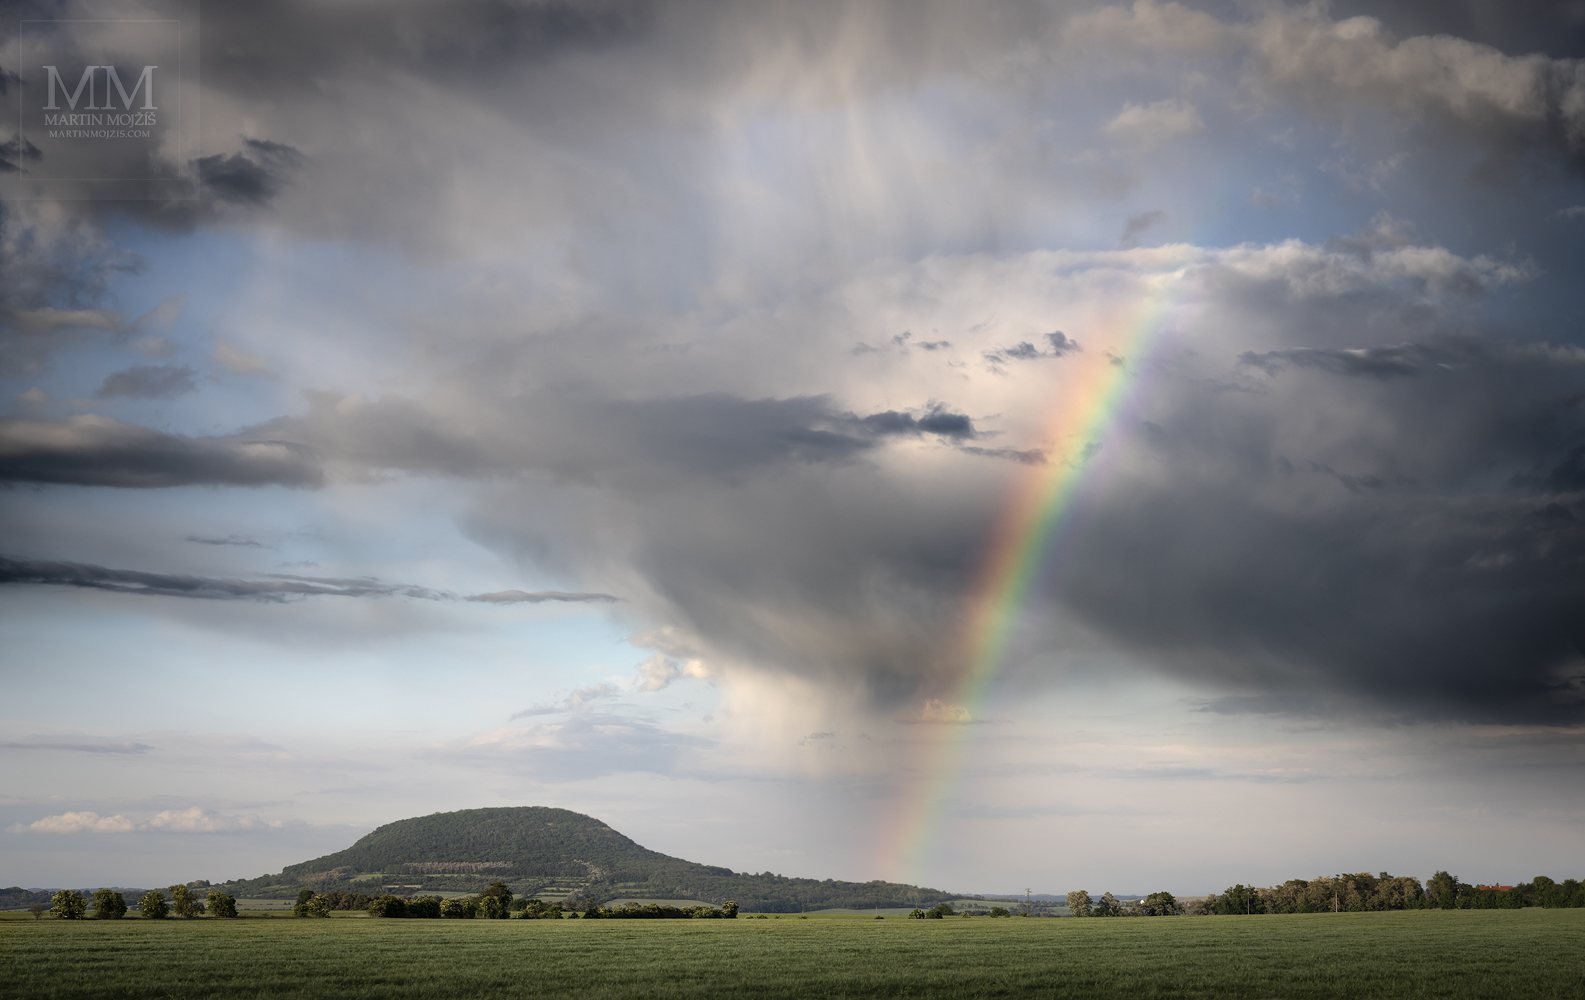 Rainbow close to Rip mountain. Fine Art large format landscape photograph SUN AND RAIN. Photographer Martin Mojzis.